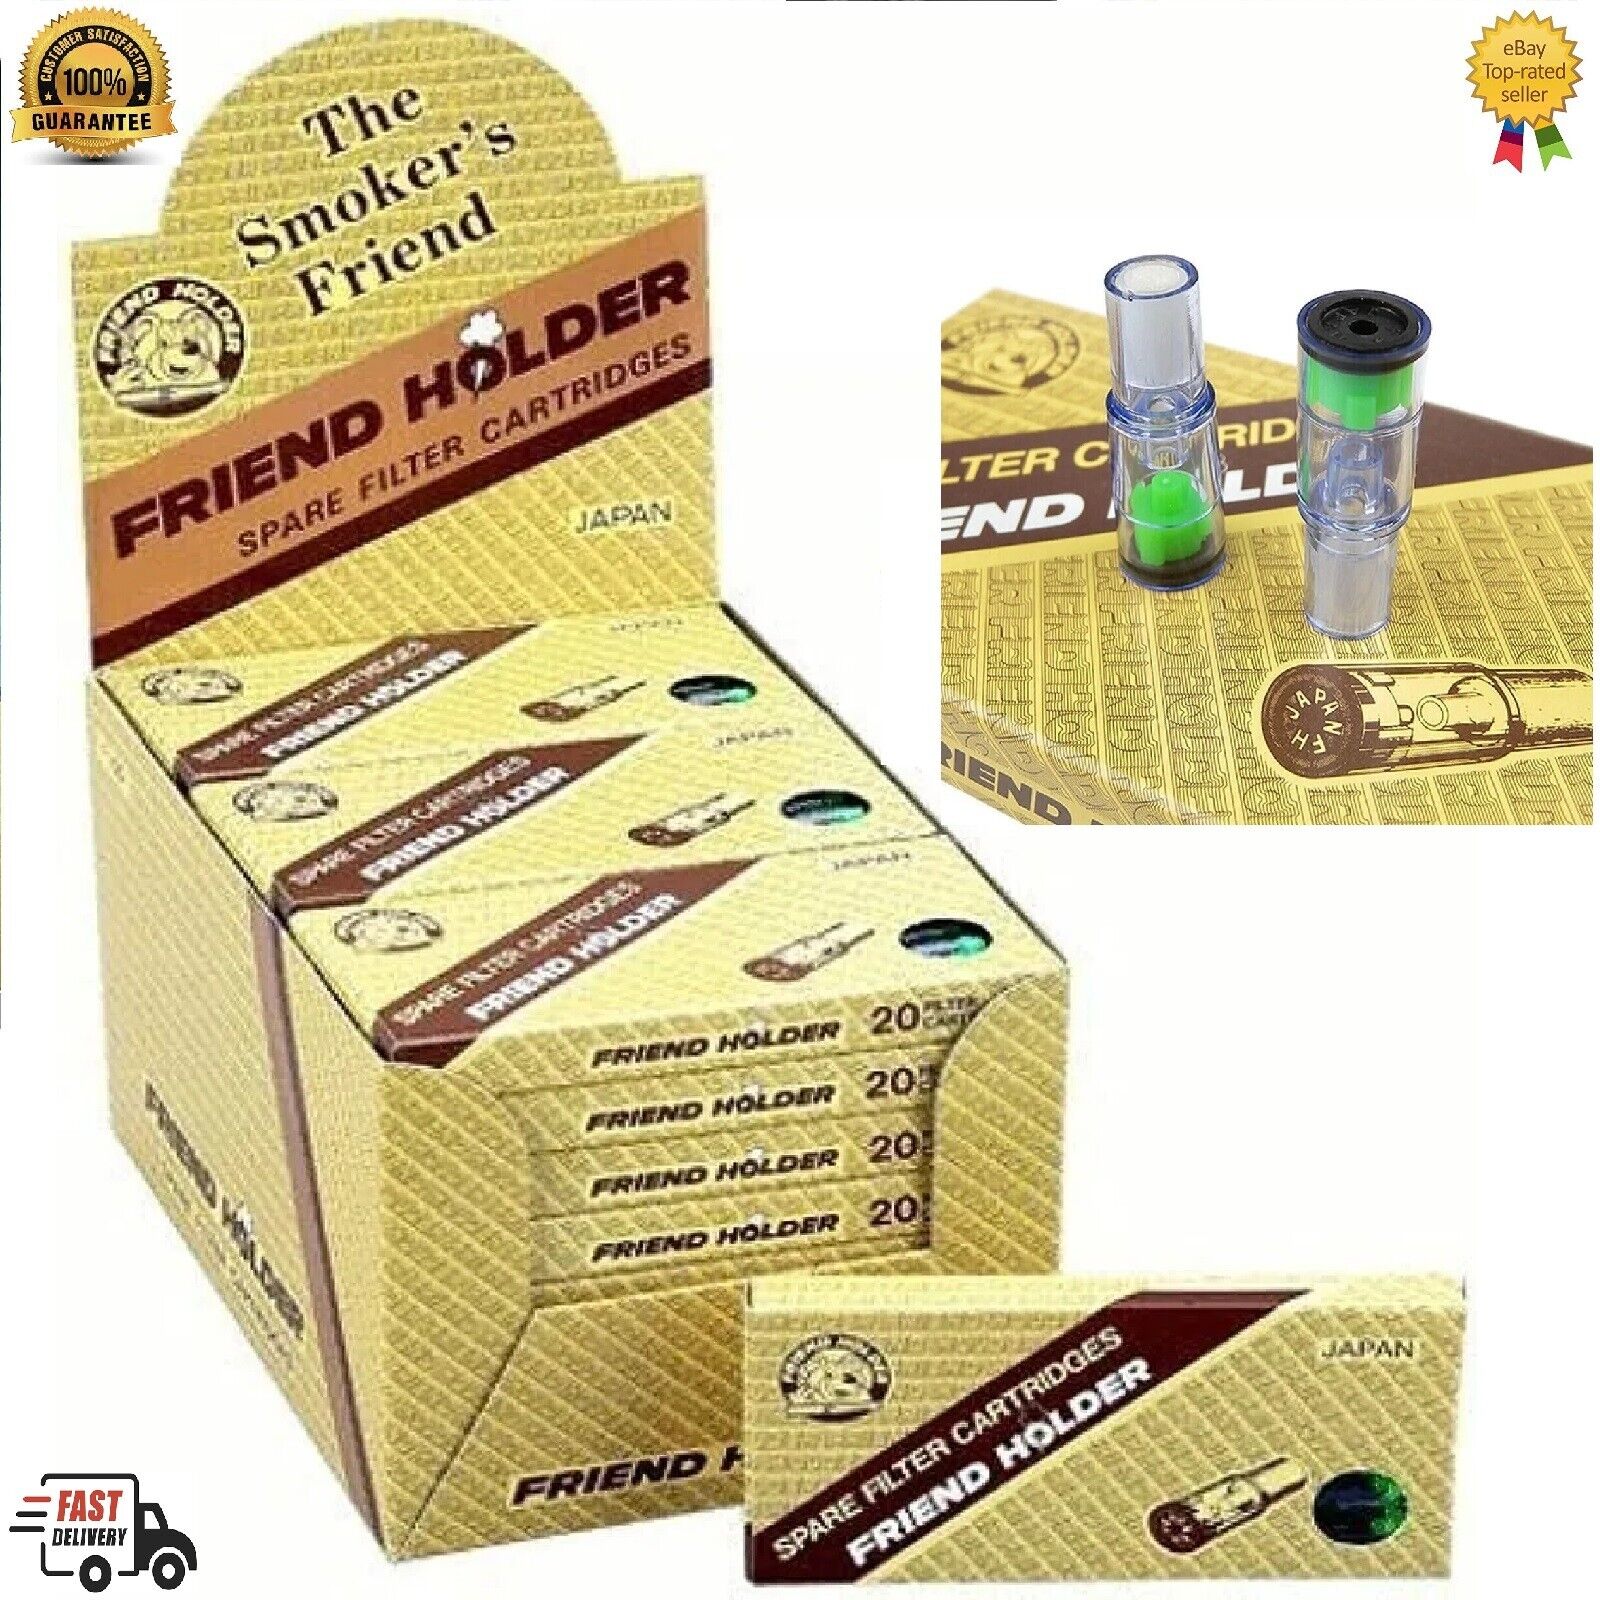 Friend Holder Cig. Spare Filter Cartridges 24 x Packs (Full Box) 480 Filters